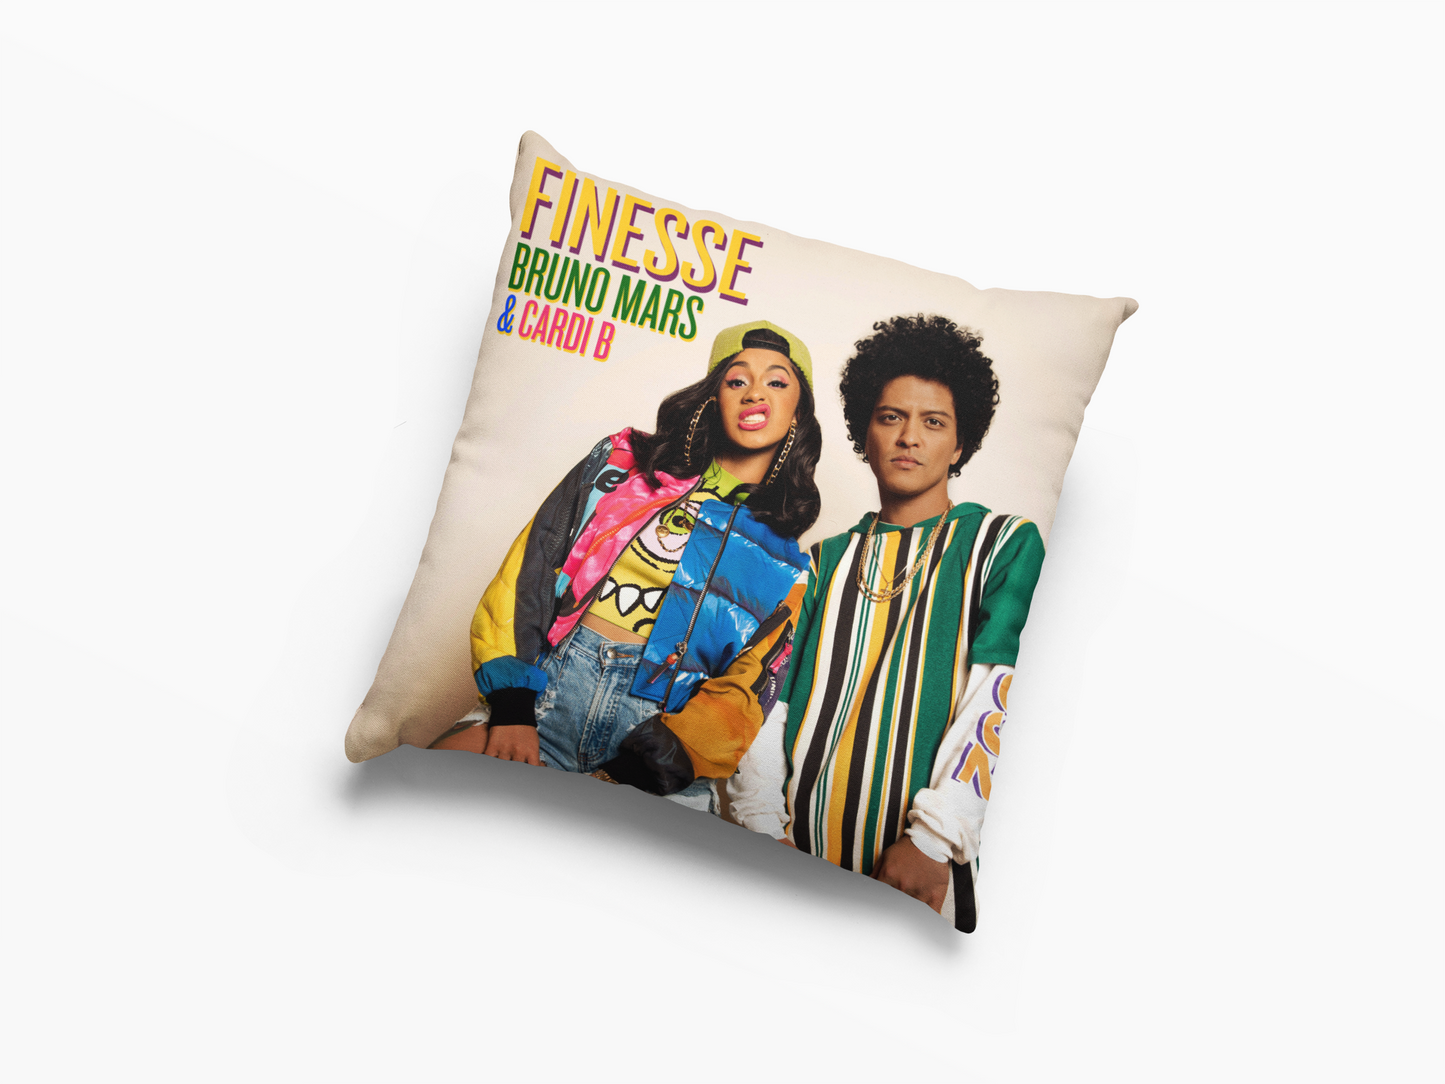 Bruno Mars Finesse ft Cardi B Cushion Case / Pillow Case